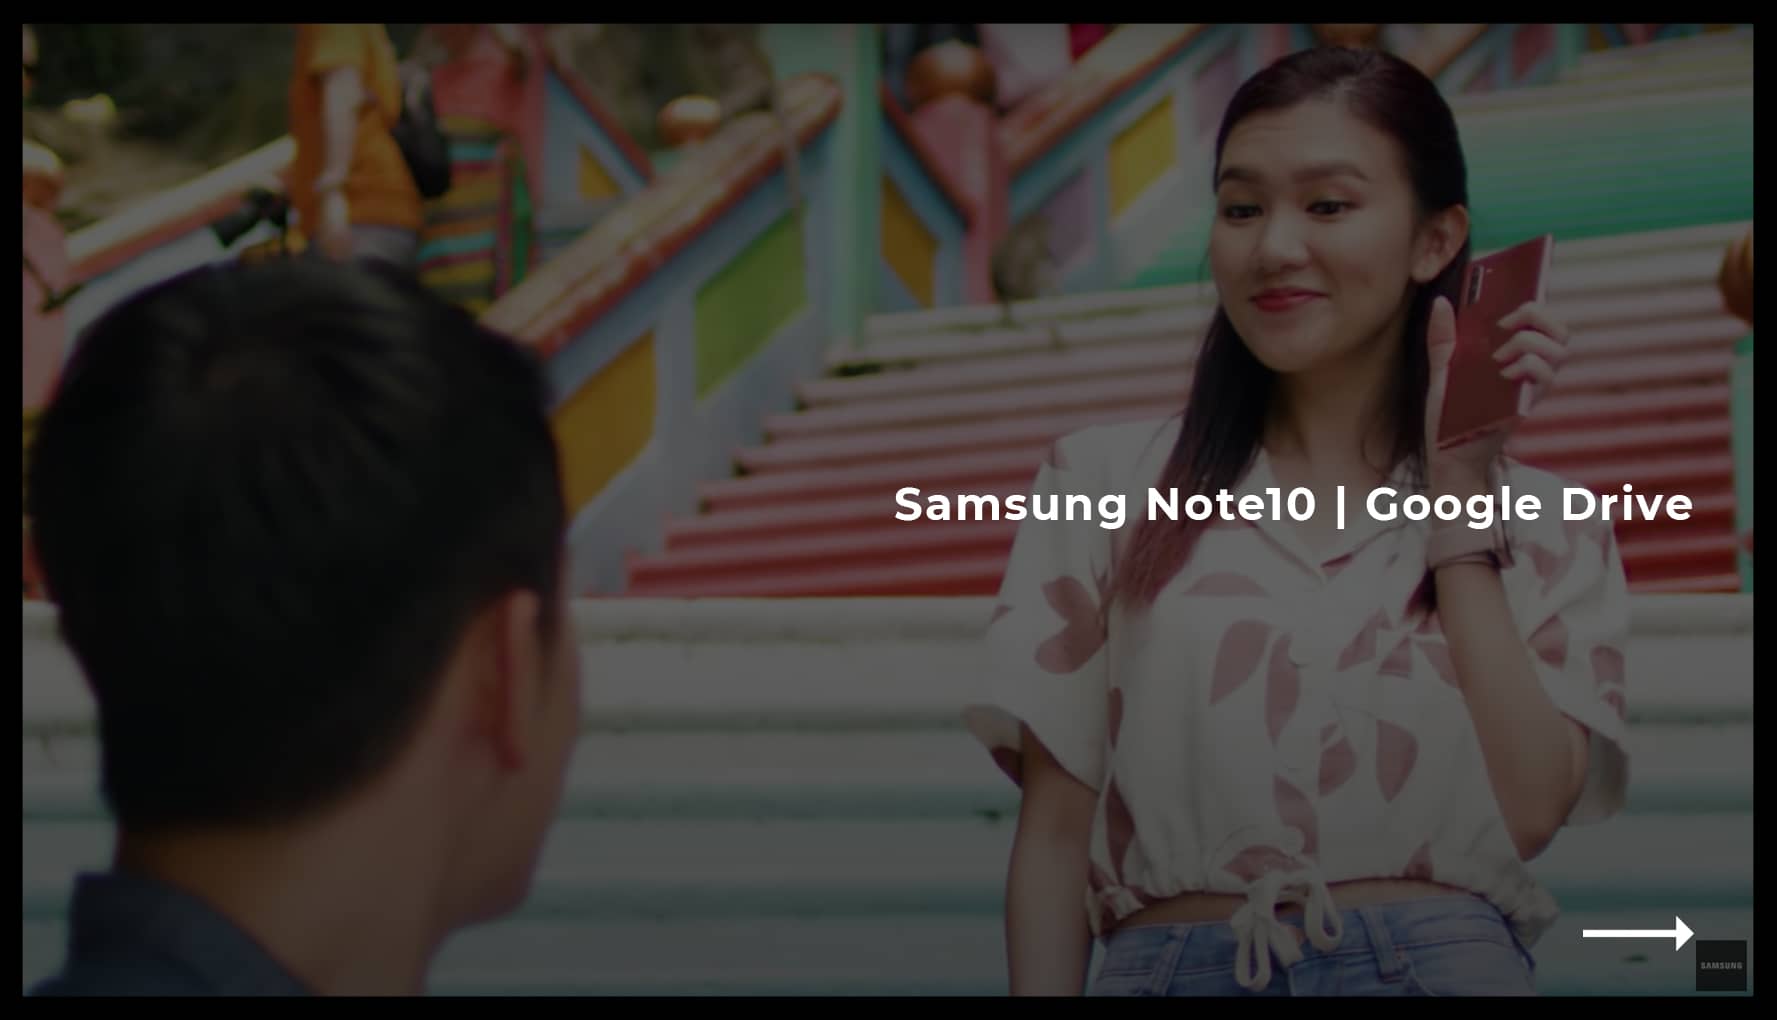 Samsung Note10 - Google Drive